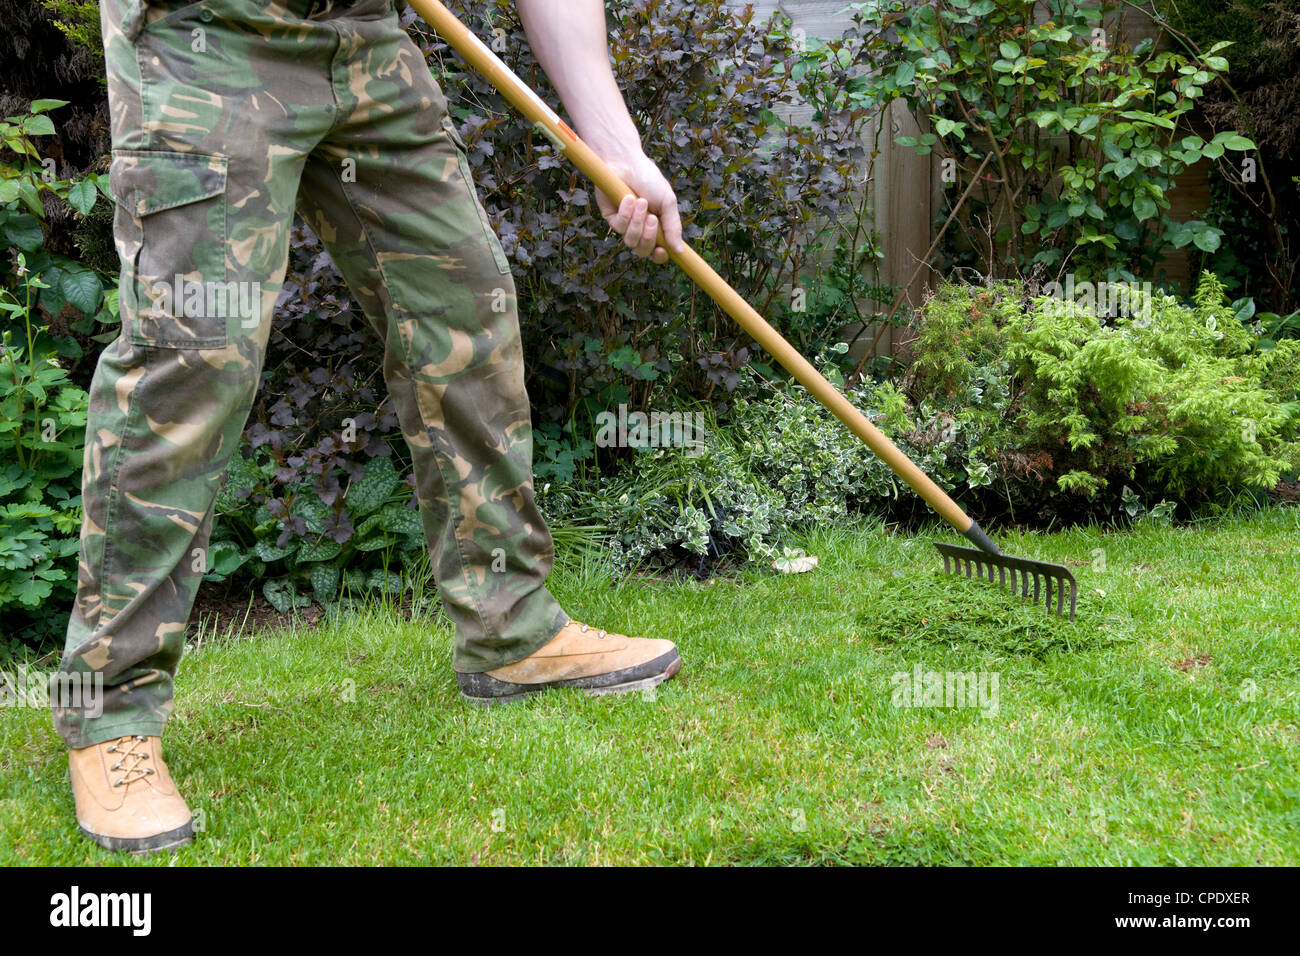 Young Caucasian man raking cut grass in garden in Bristol, UK Stock Photo